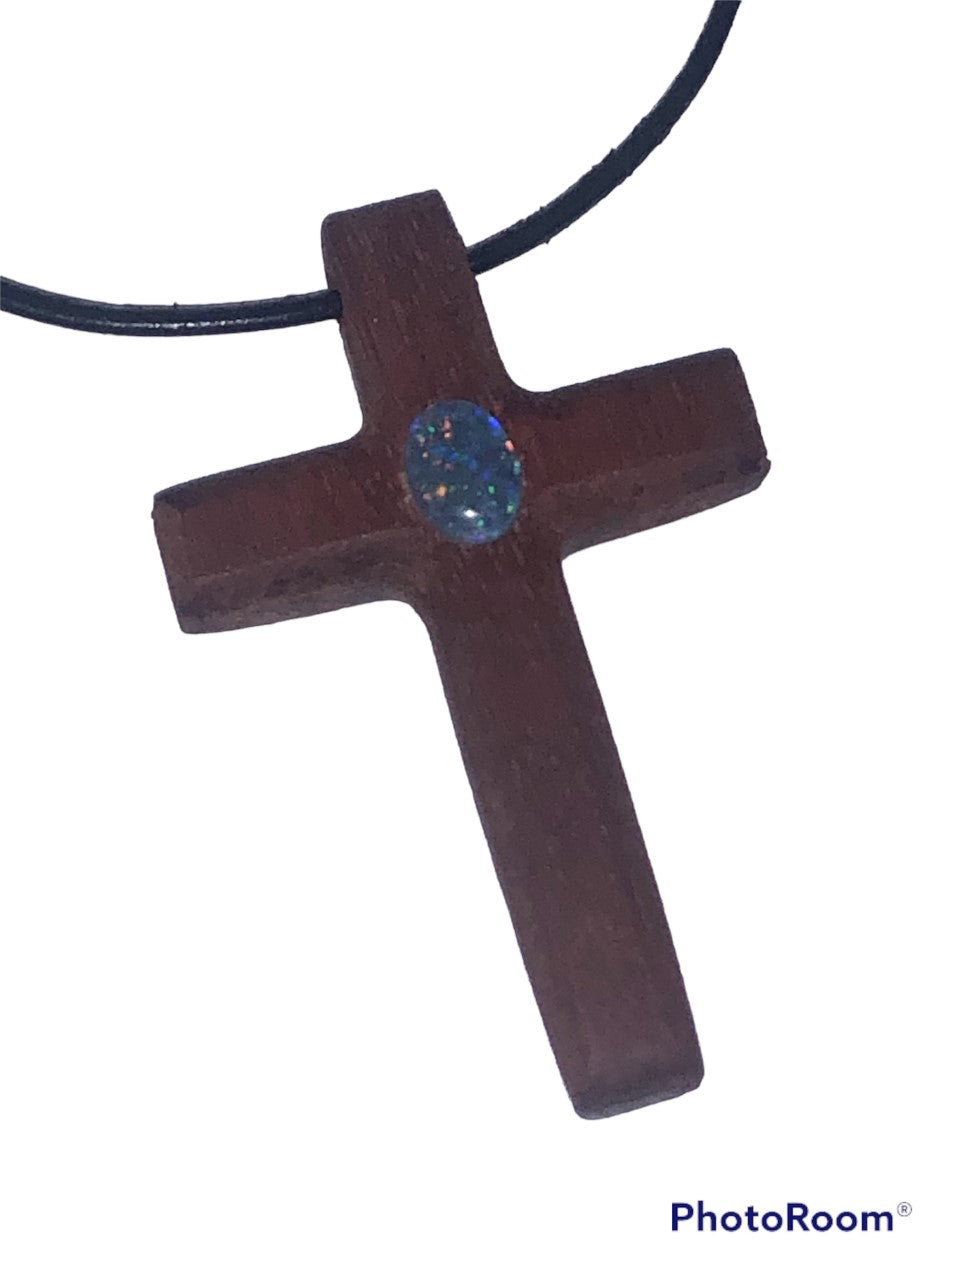 Wooden cross pendant with opal triplet